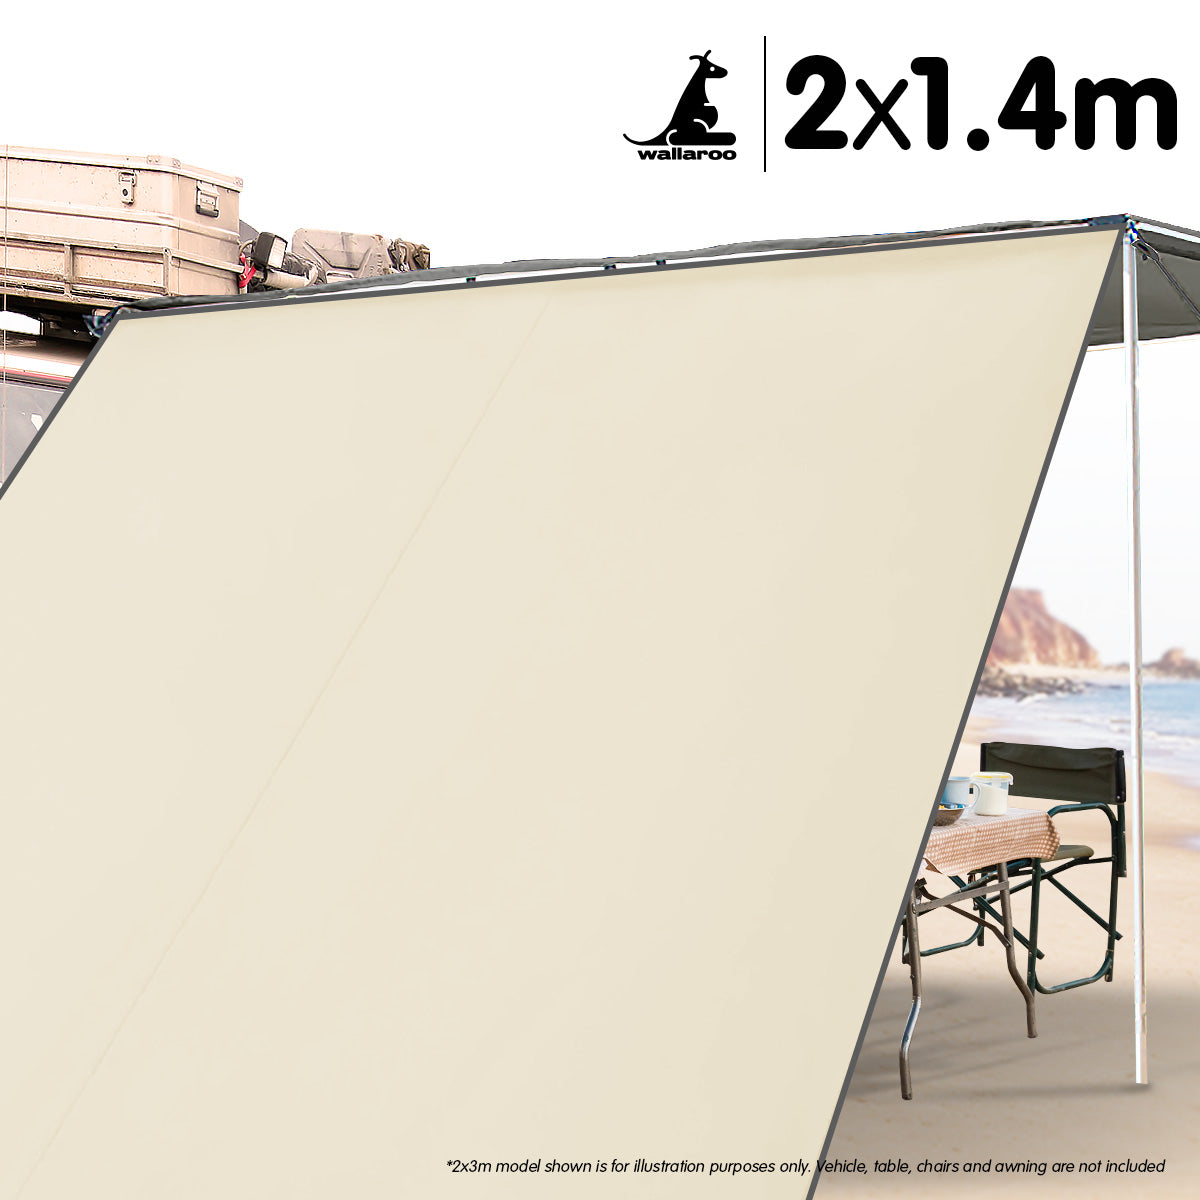 Wallaroo 2m x 1.4m Car Awning Extension - Sand